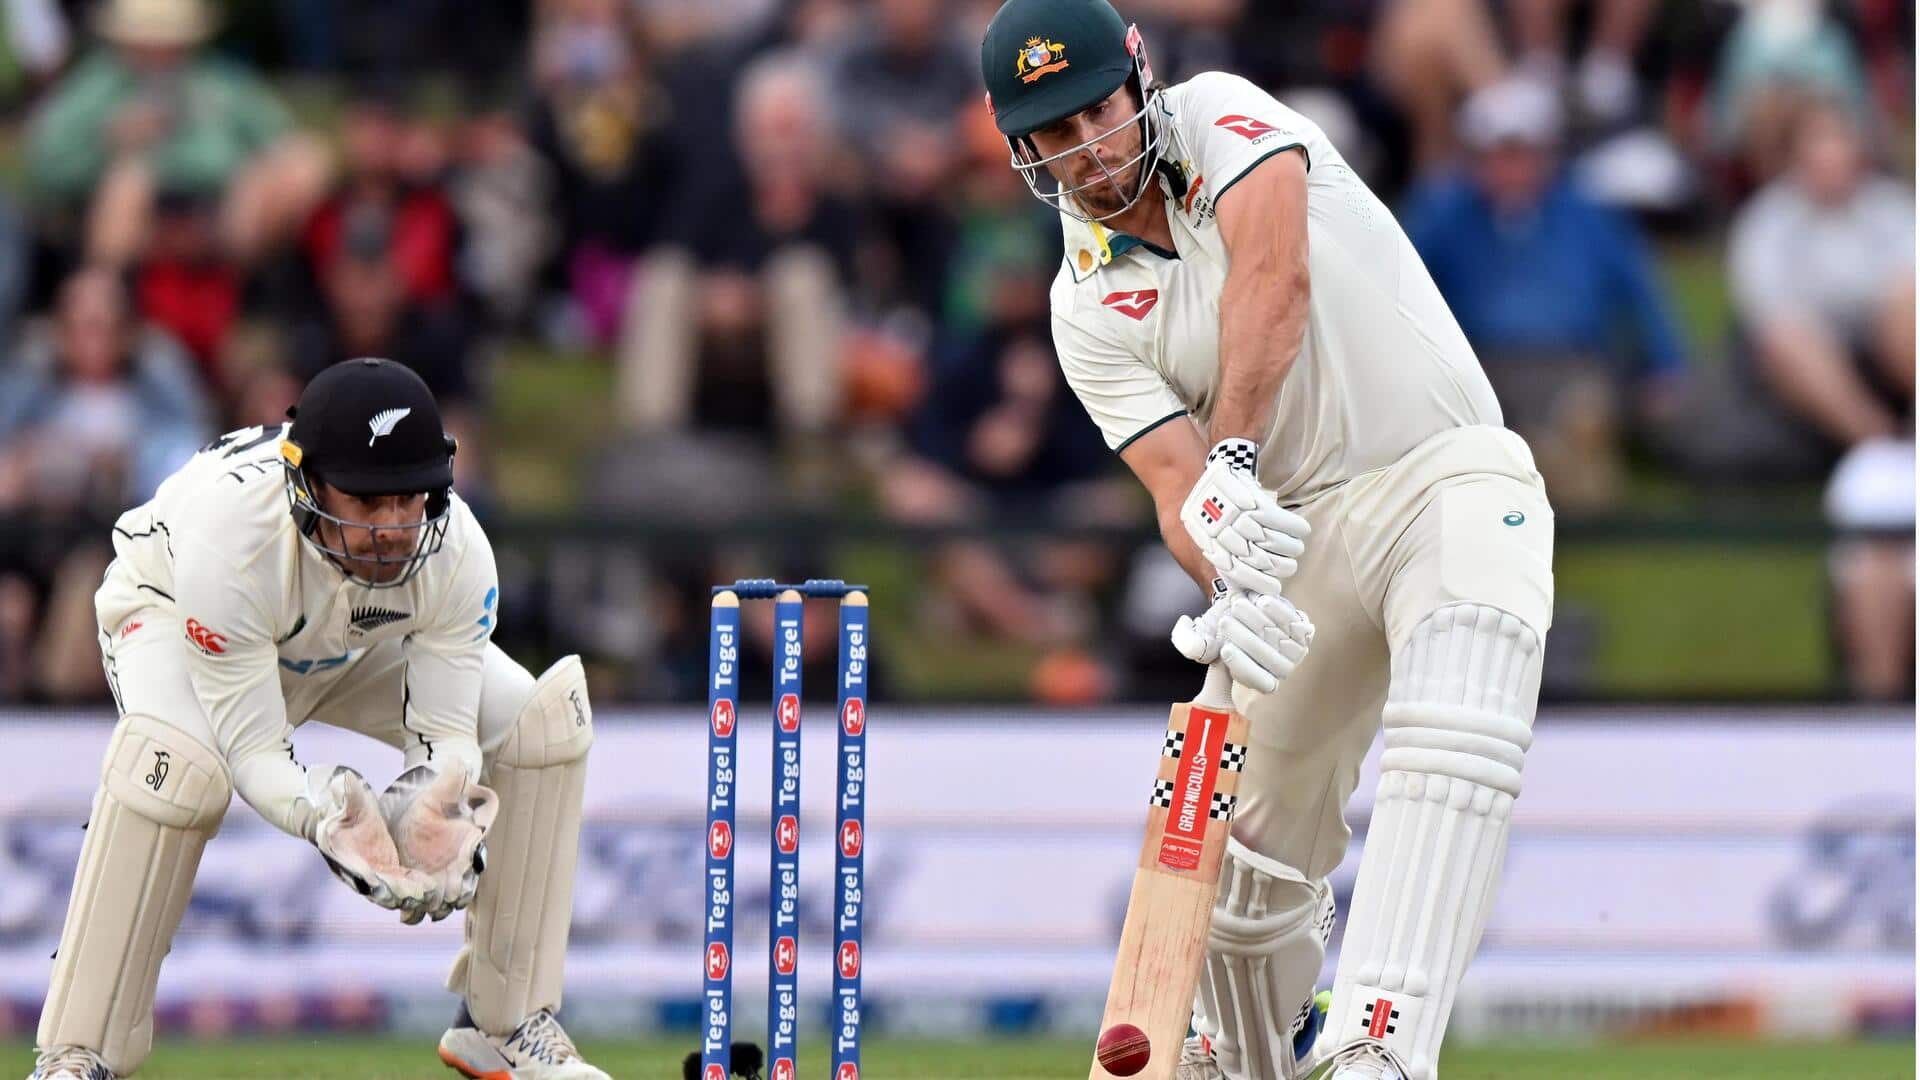 Mitchell Marsh surpasses 2,000 Test runs with 80 vs NZ